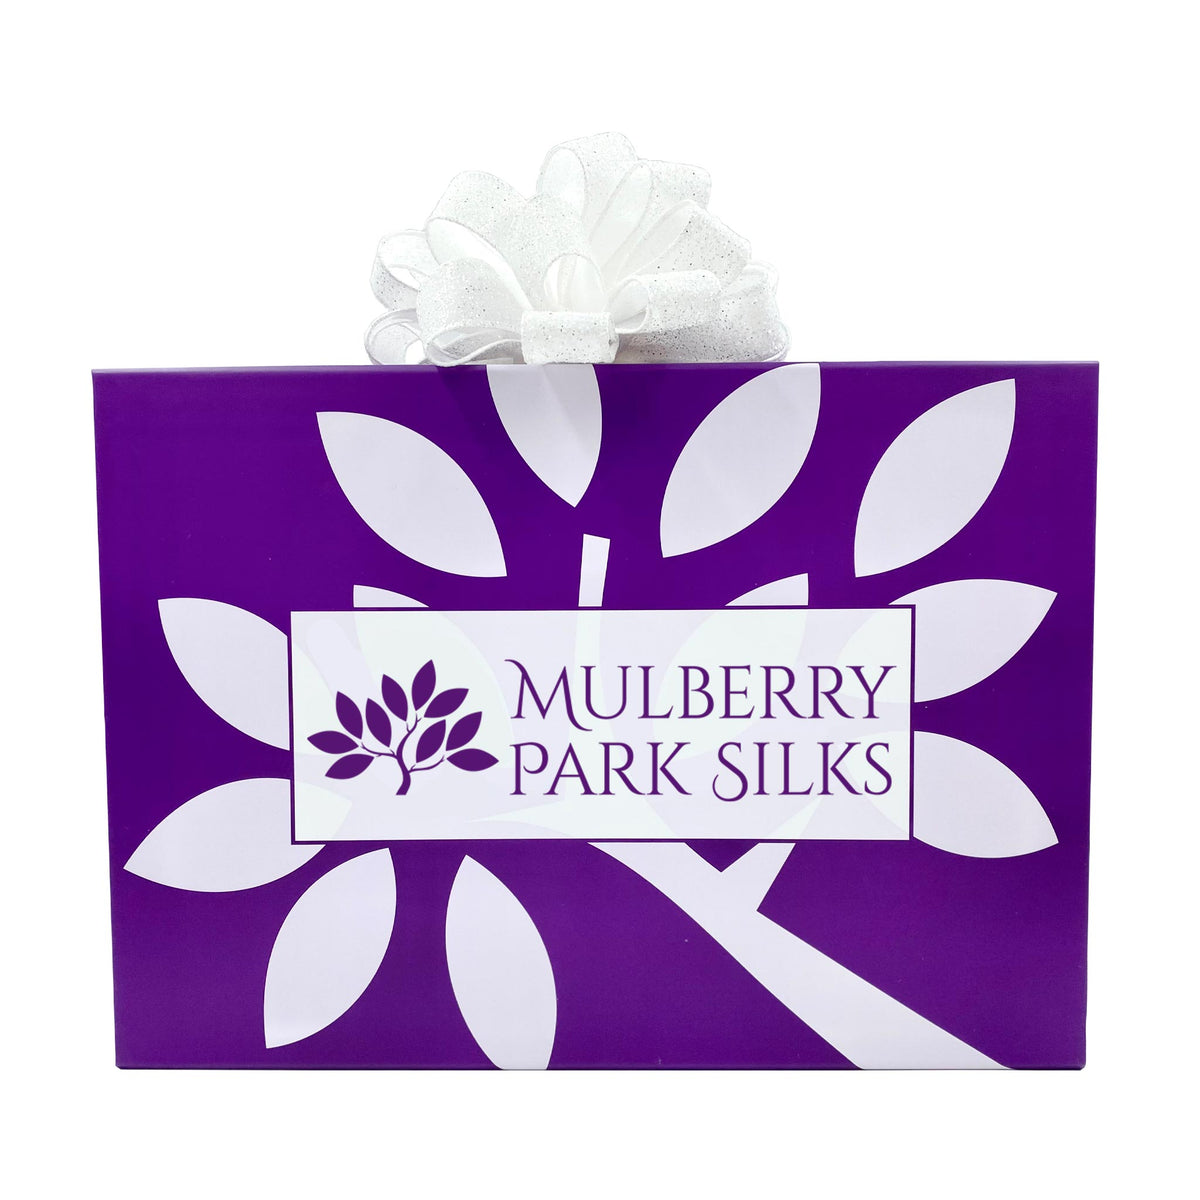 Mulberry Park Silks Mulberry Park Silks e-Gift Card Giftbox